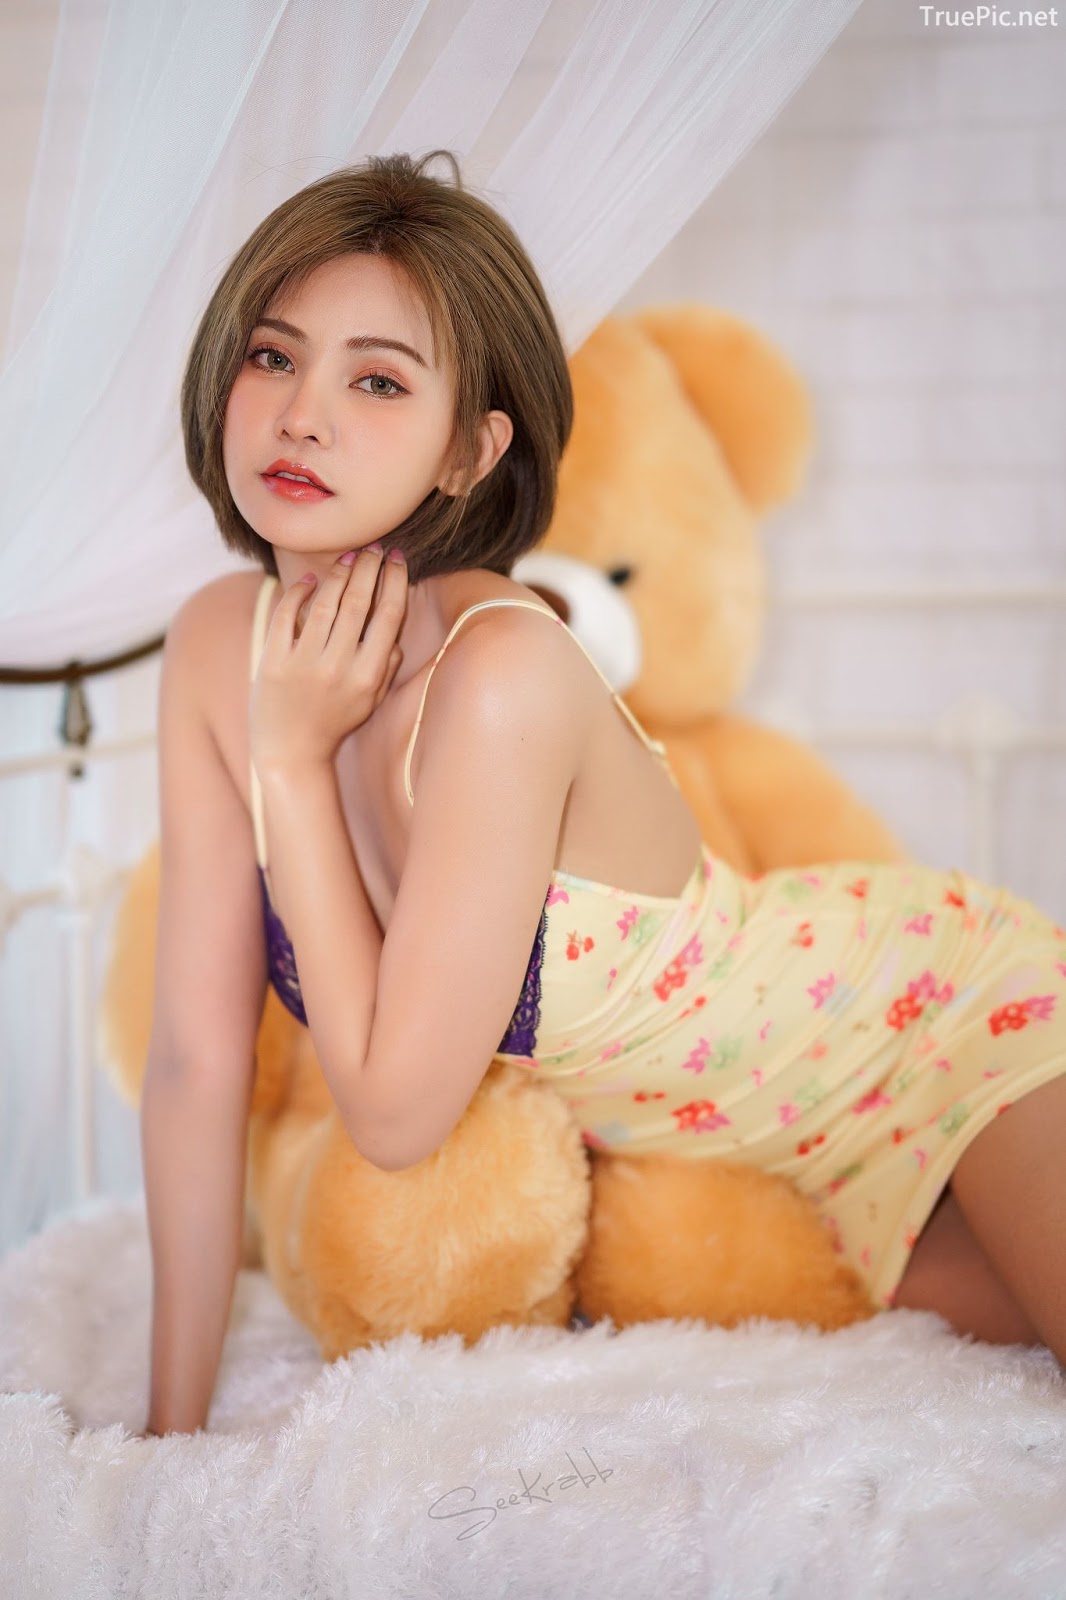 Thailand sexy model - Sutasinee Siriruke - Sleepwear and Lingerie Set - TruePic.net - Picture 19